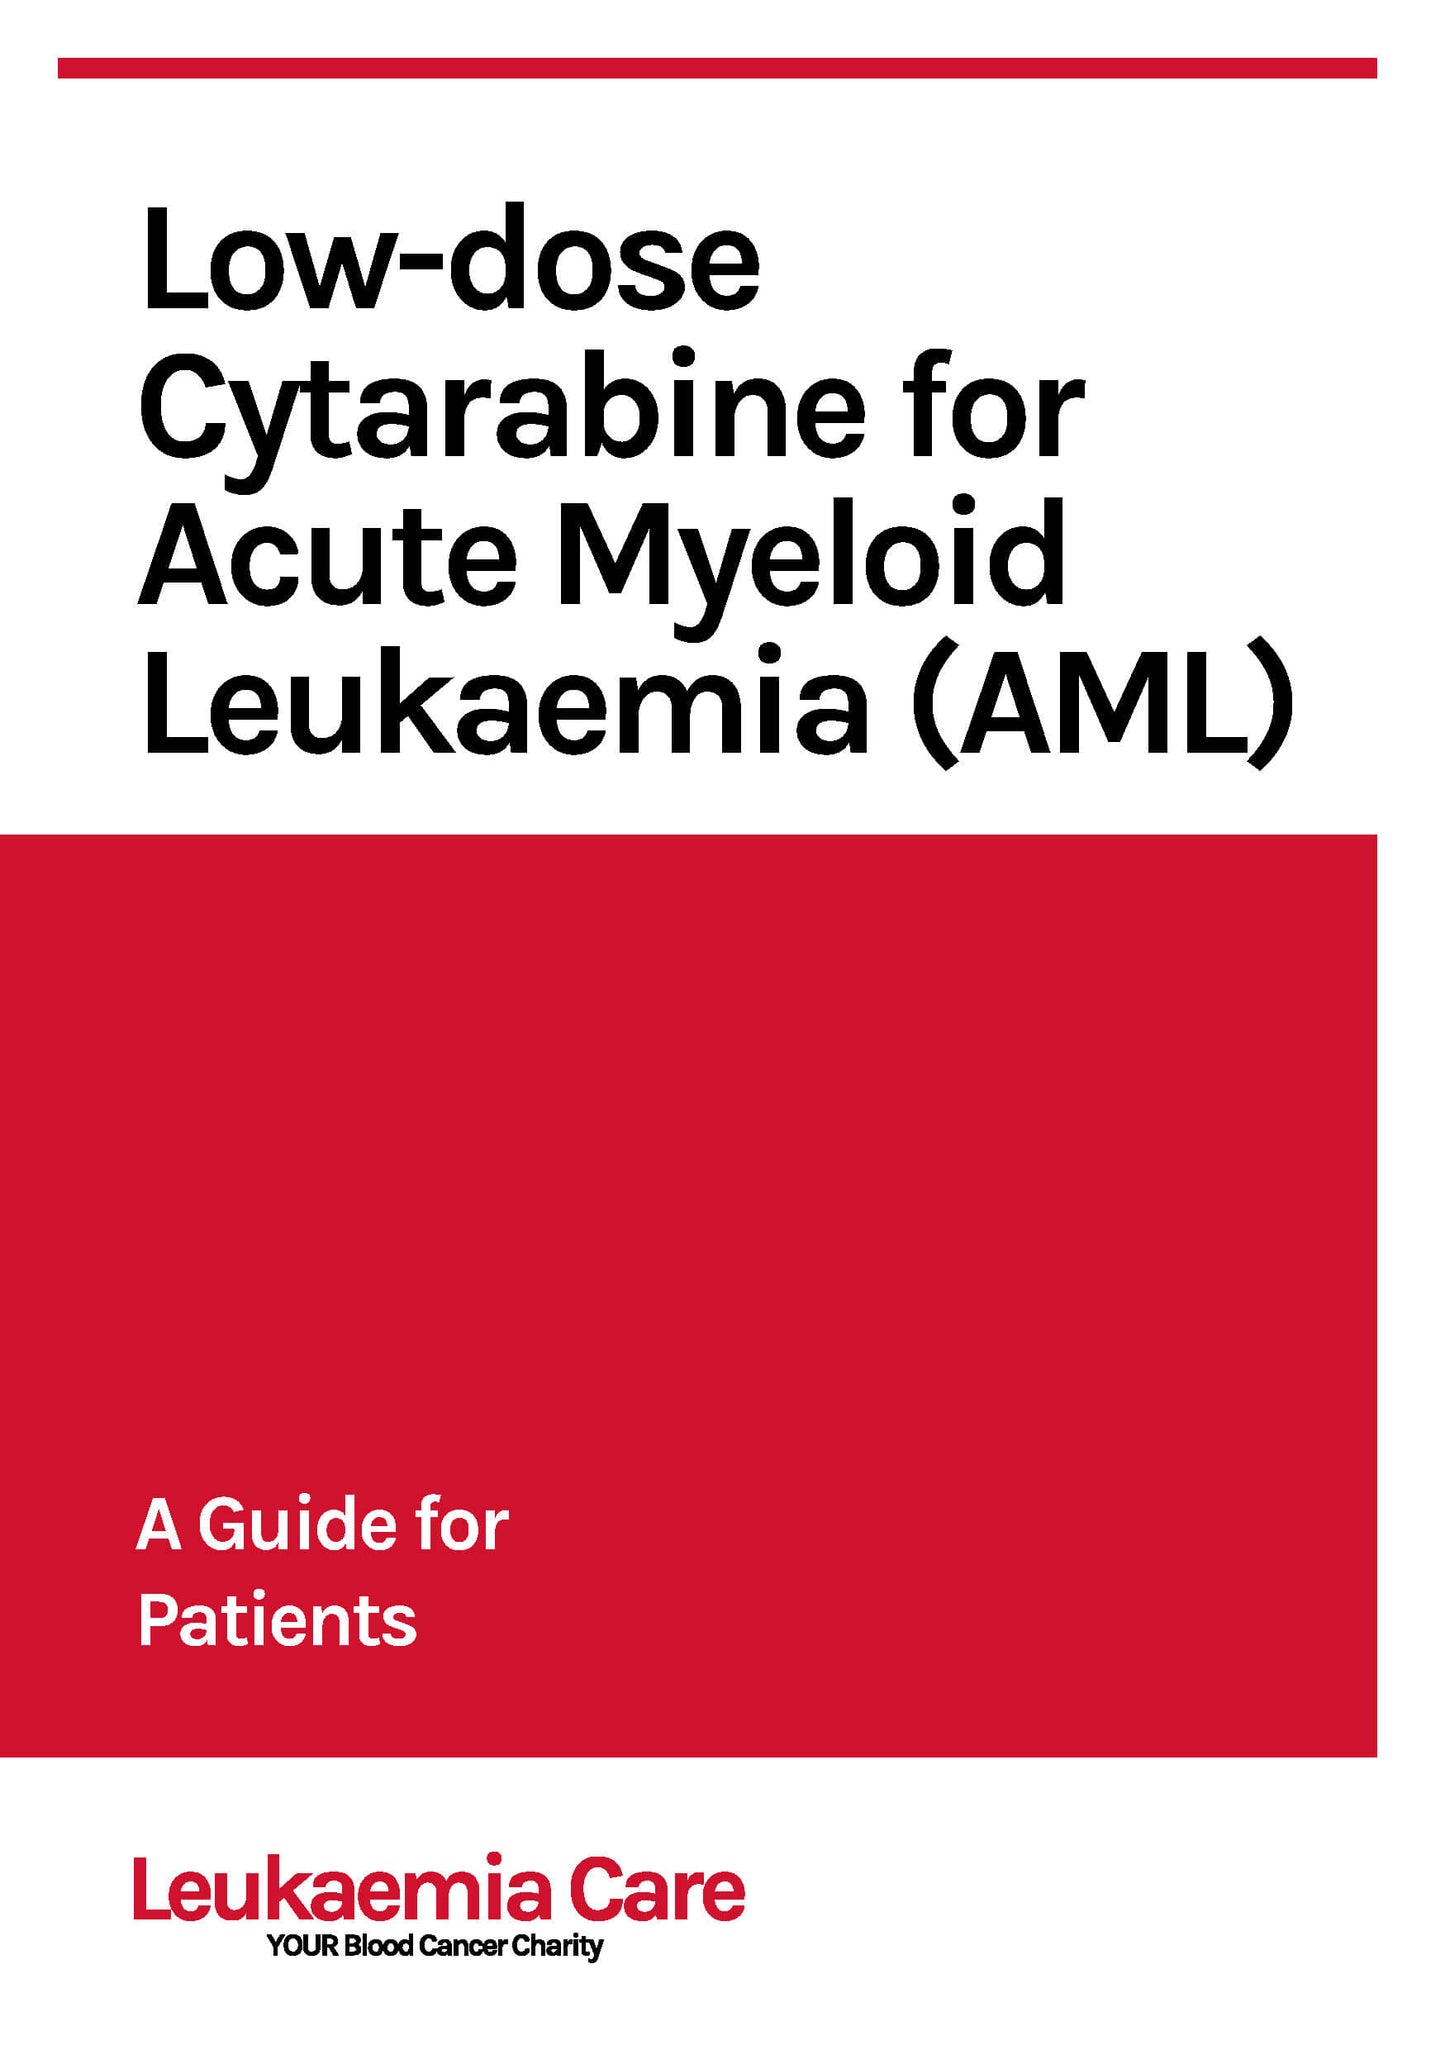 Low-dose Cytarabine for Acute Myeloid Leukaemia (AML)